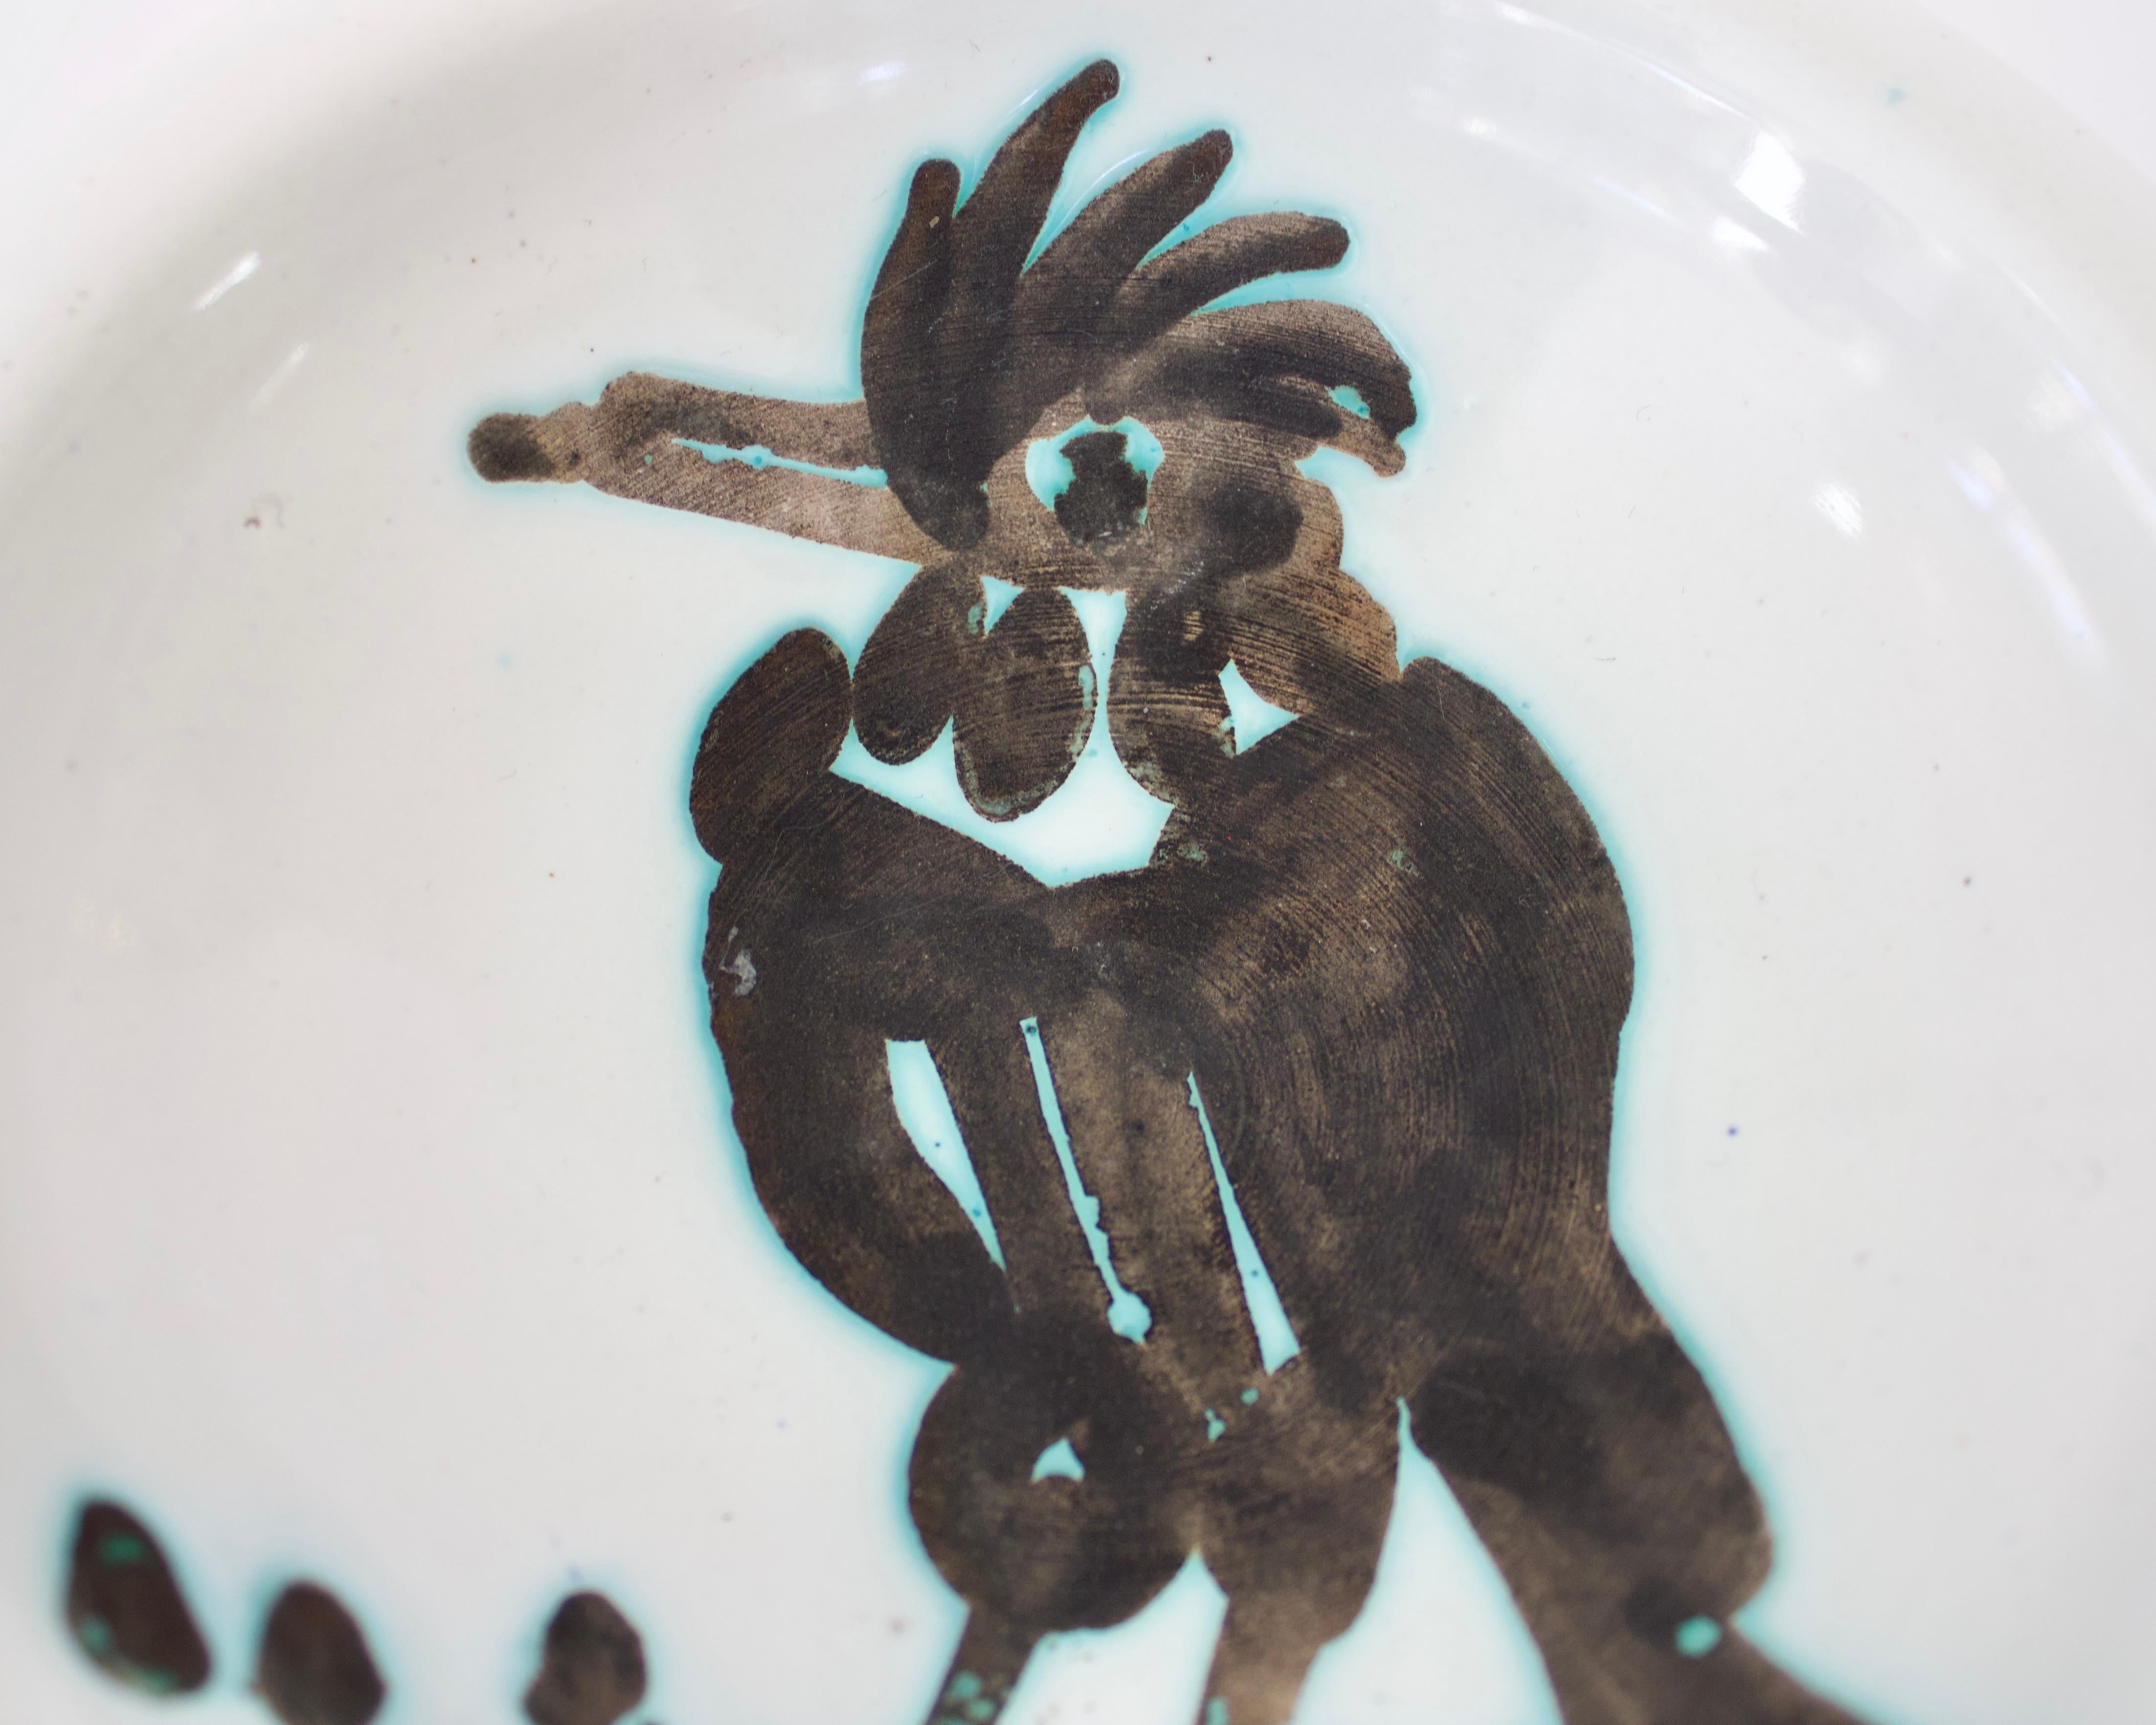 French Pablo Picasso Ceramic Dish Editions Picasso Madoura Bird with Tuft, circa 1952